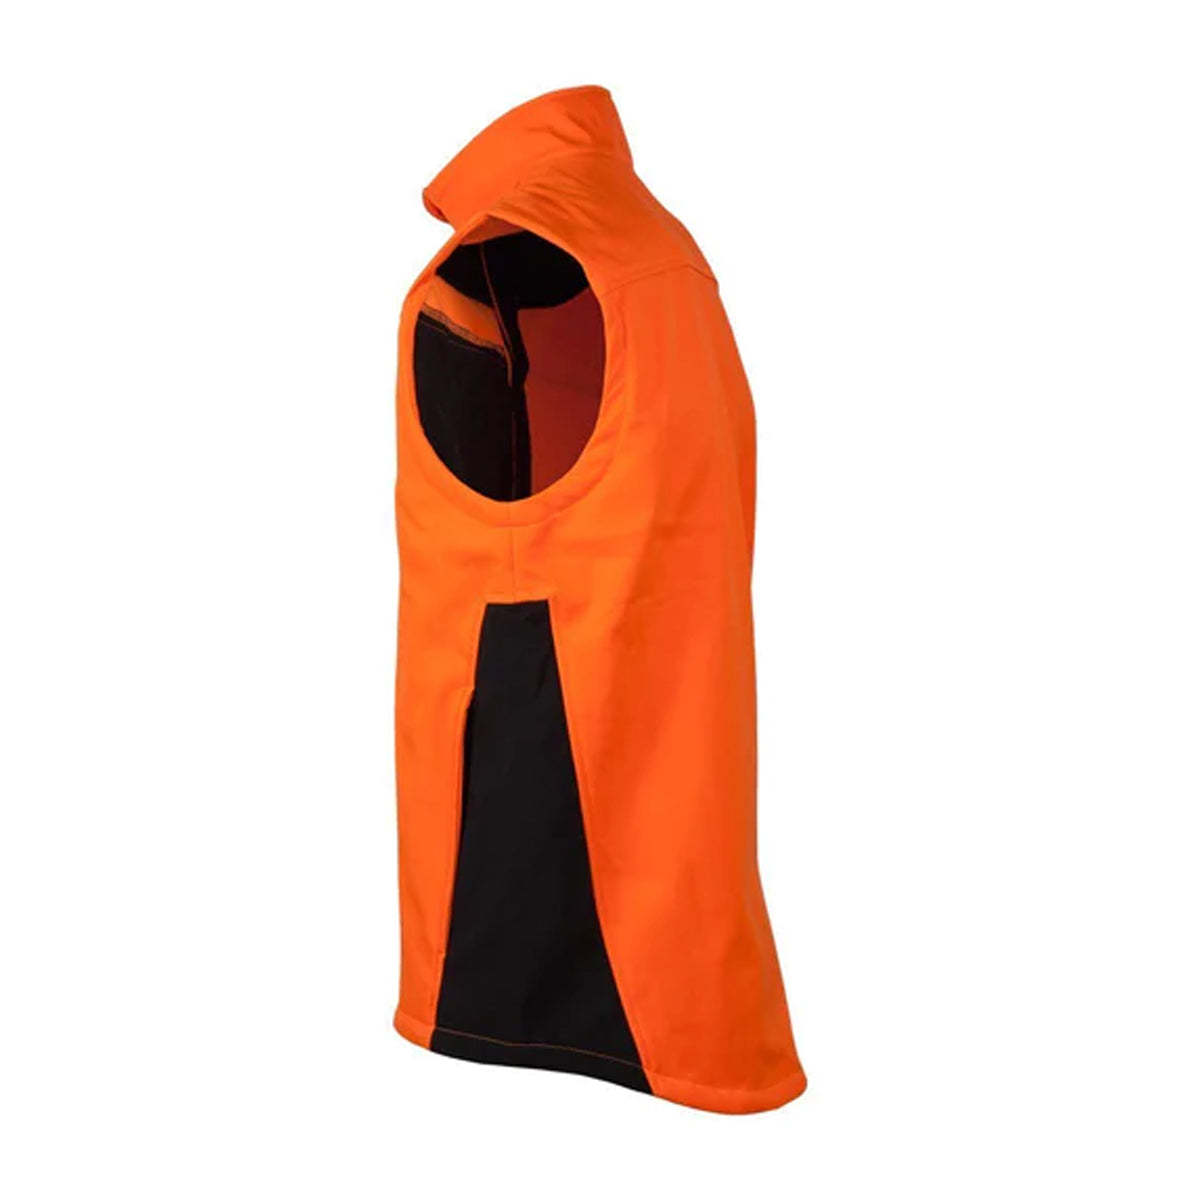 King's Blaze Soft Shell Vest in Blaze Orange by GOHUNT | King's - GOHUNT Shop